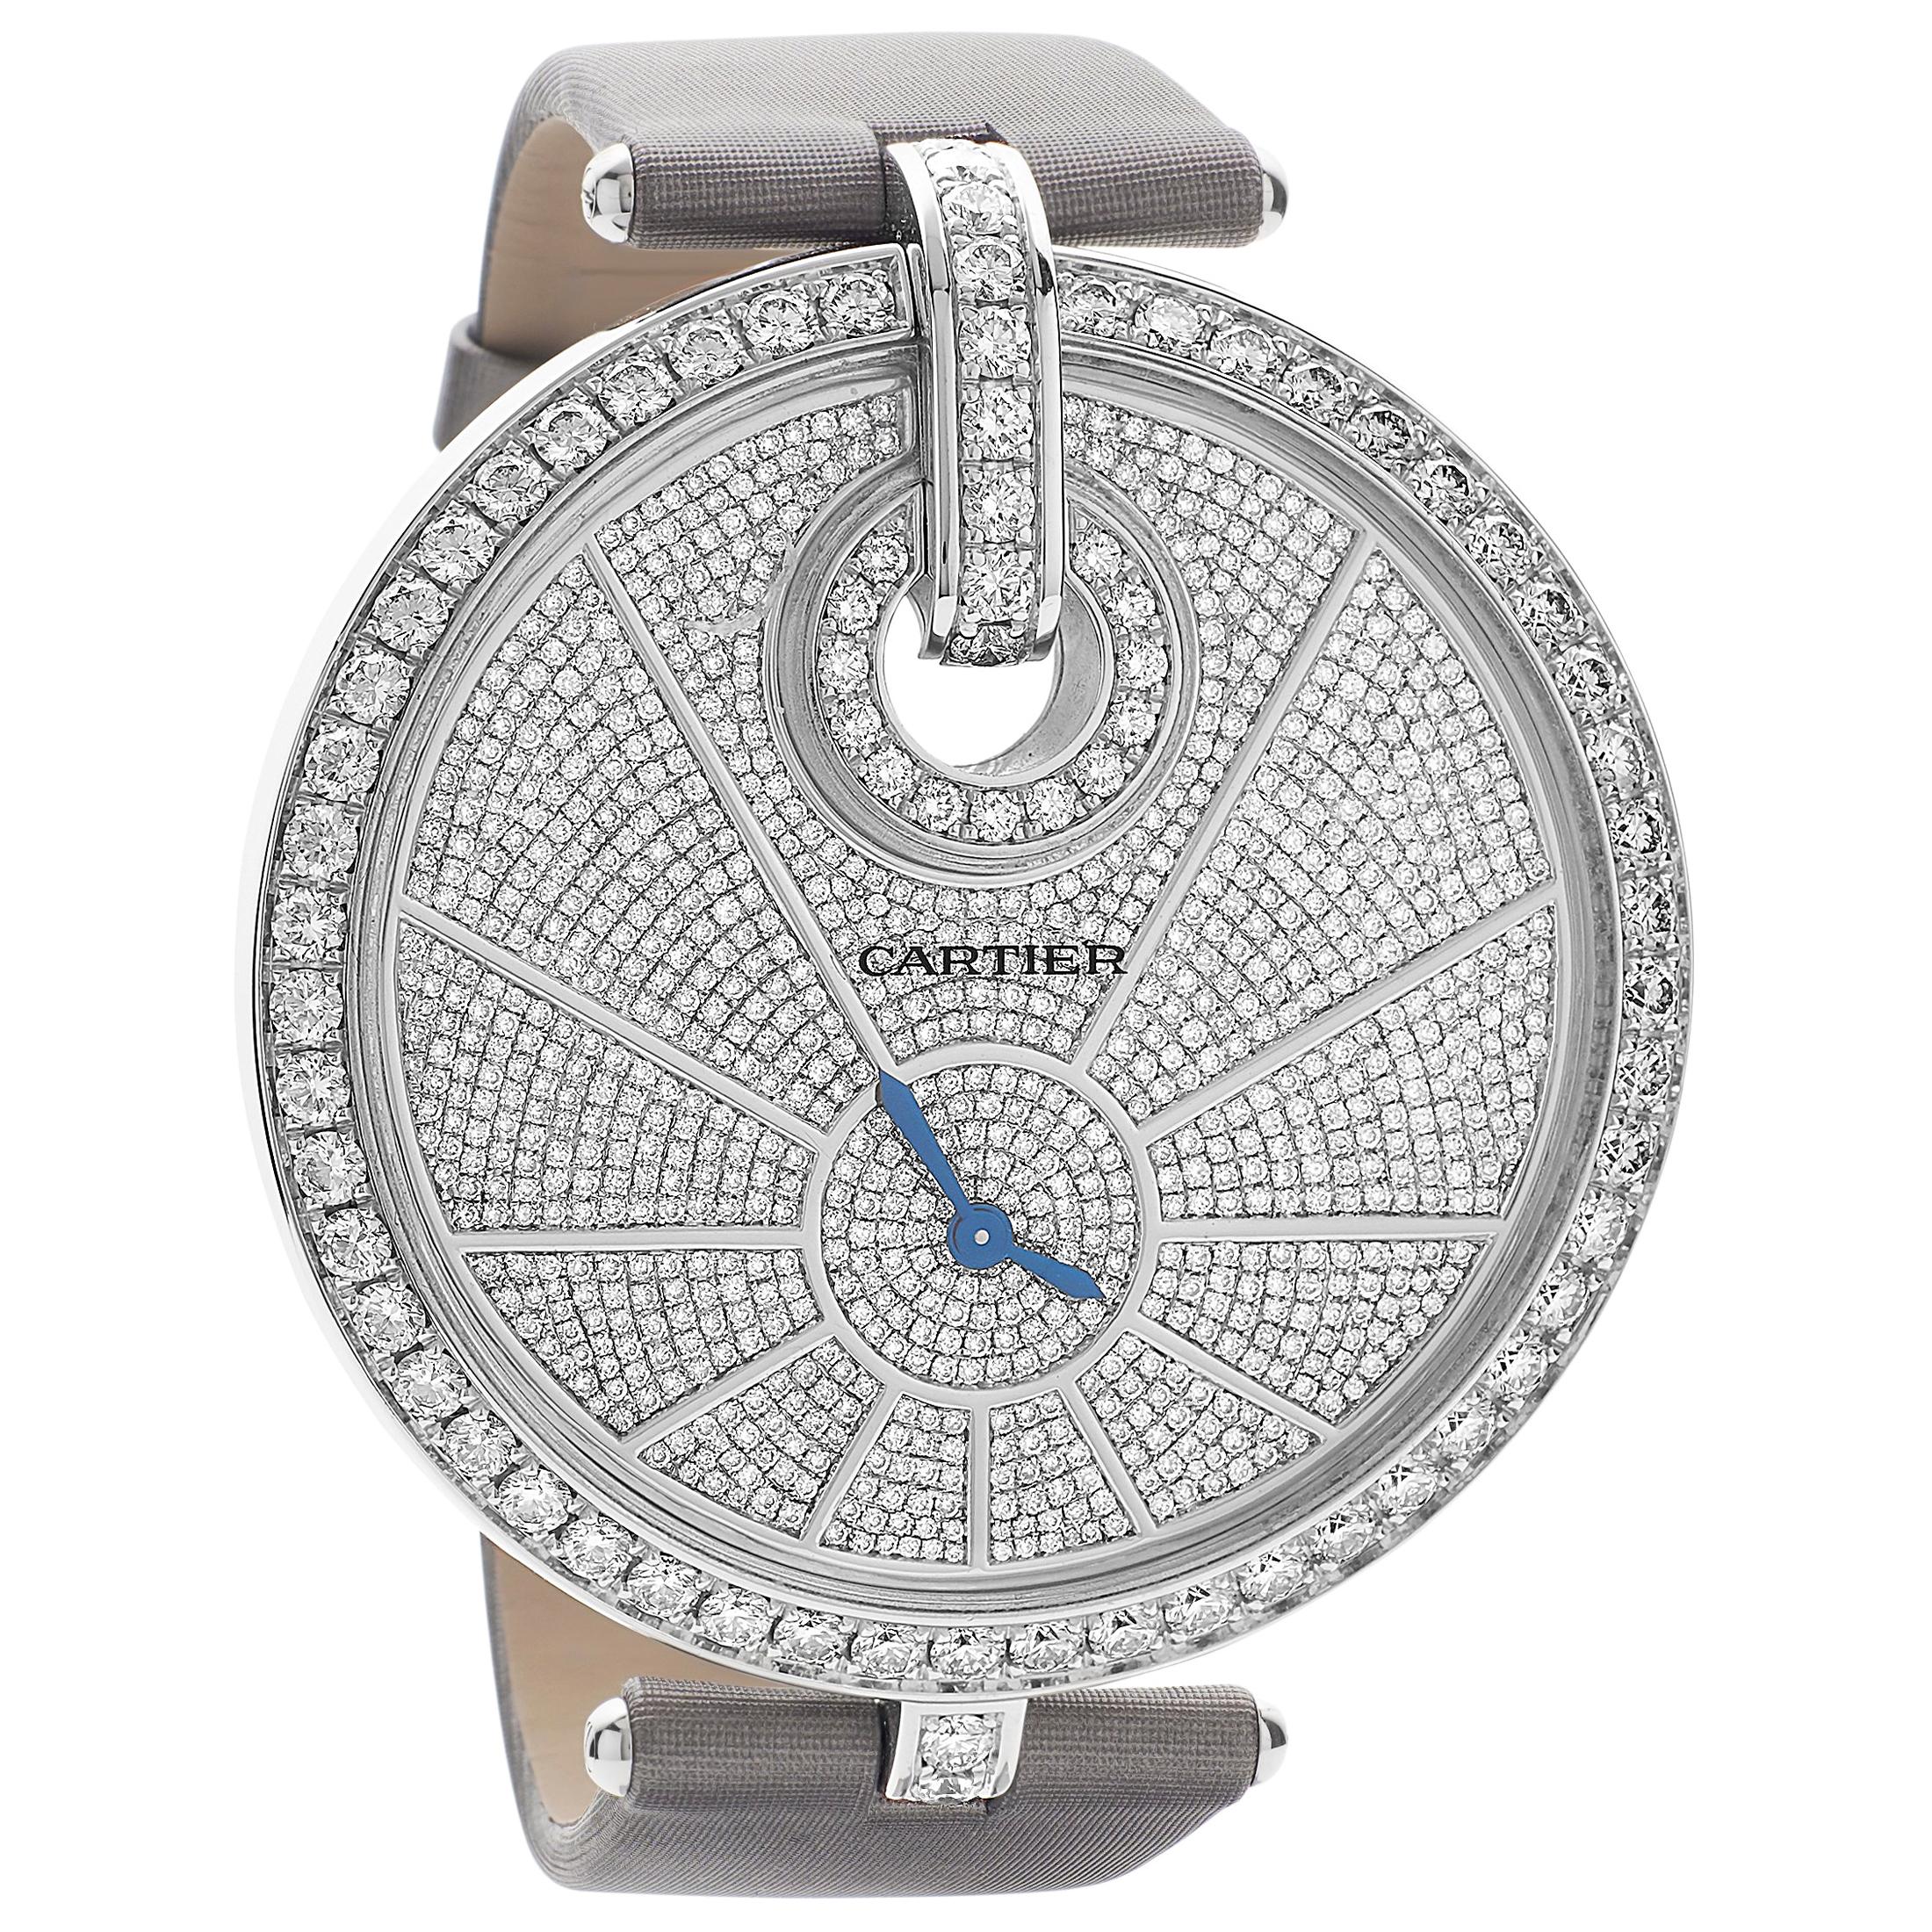 Captive de Cartier Watch White Gold Diamond, High Jewelry Extra Large